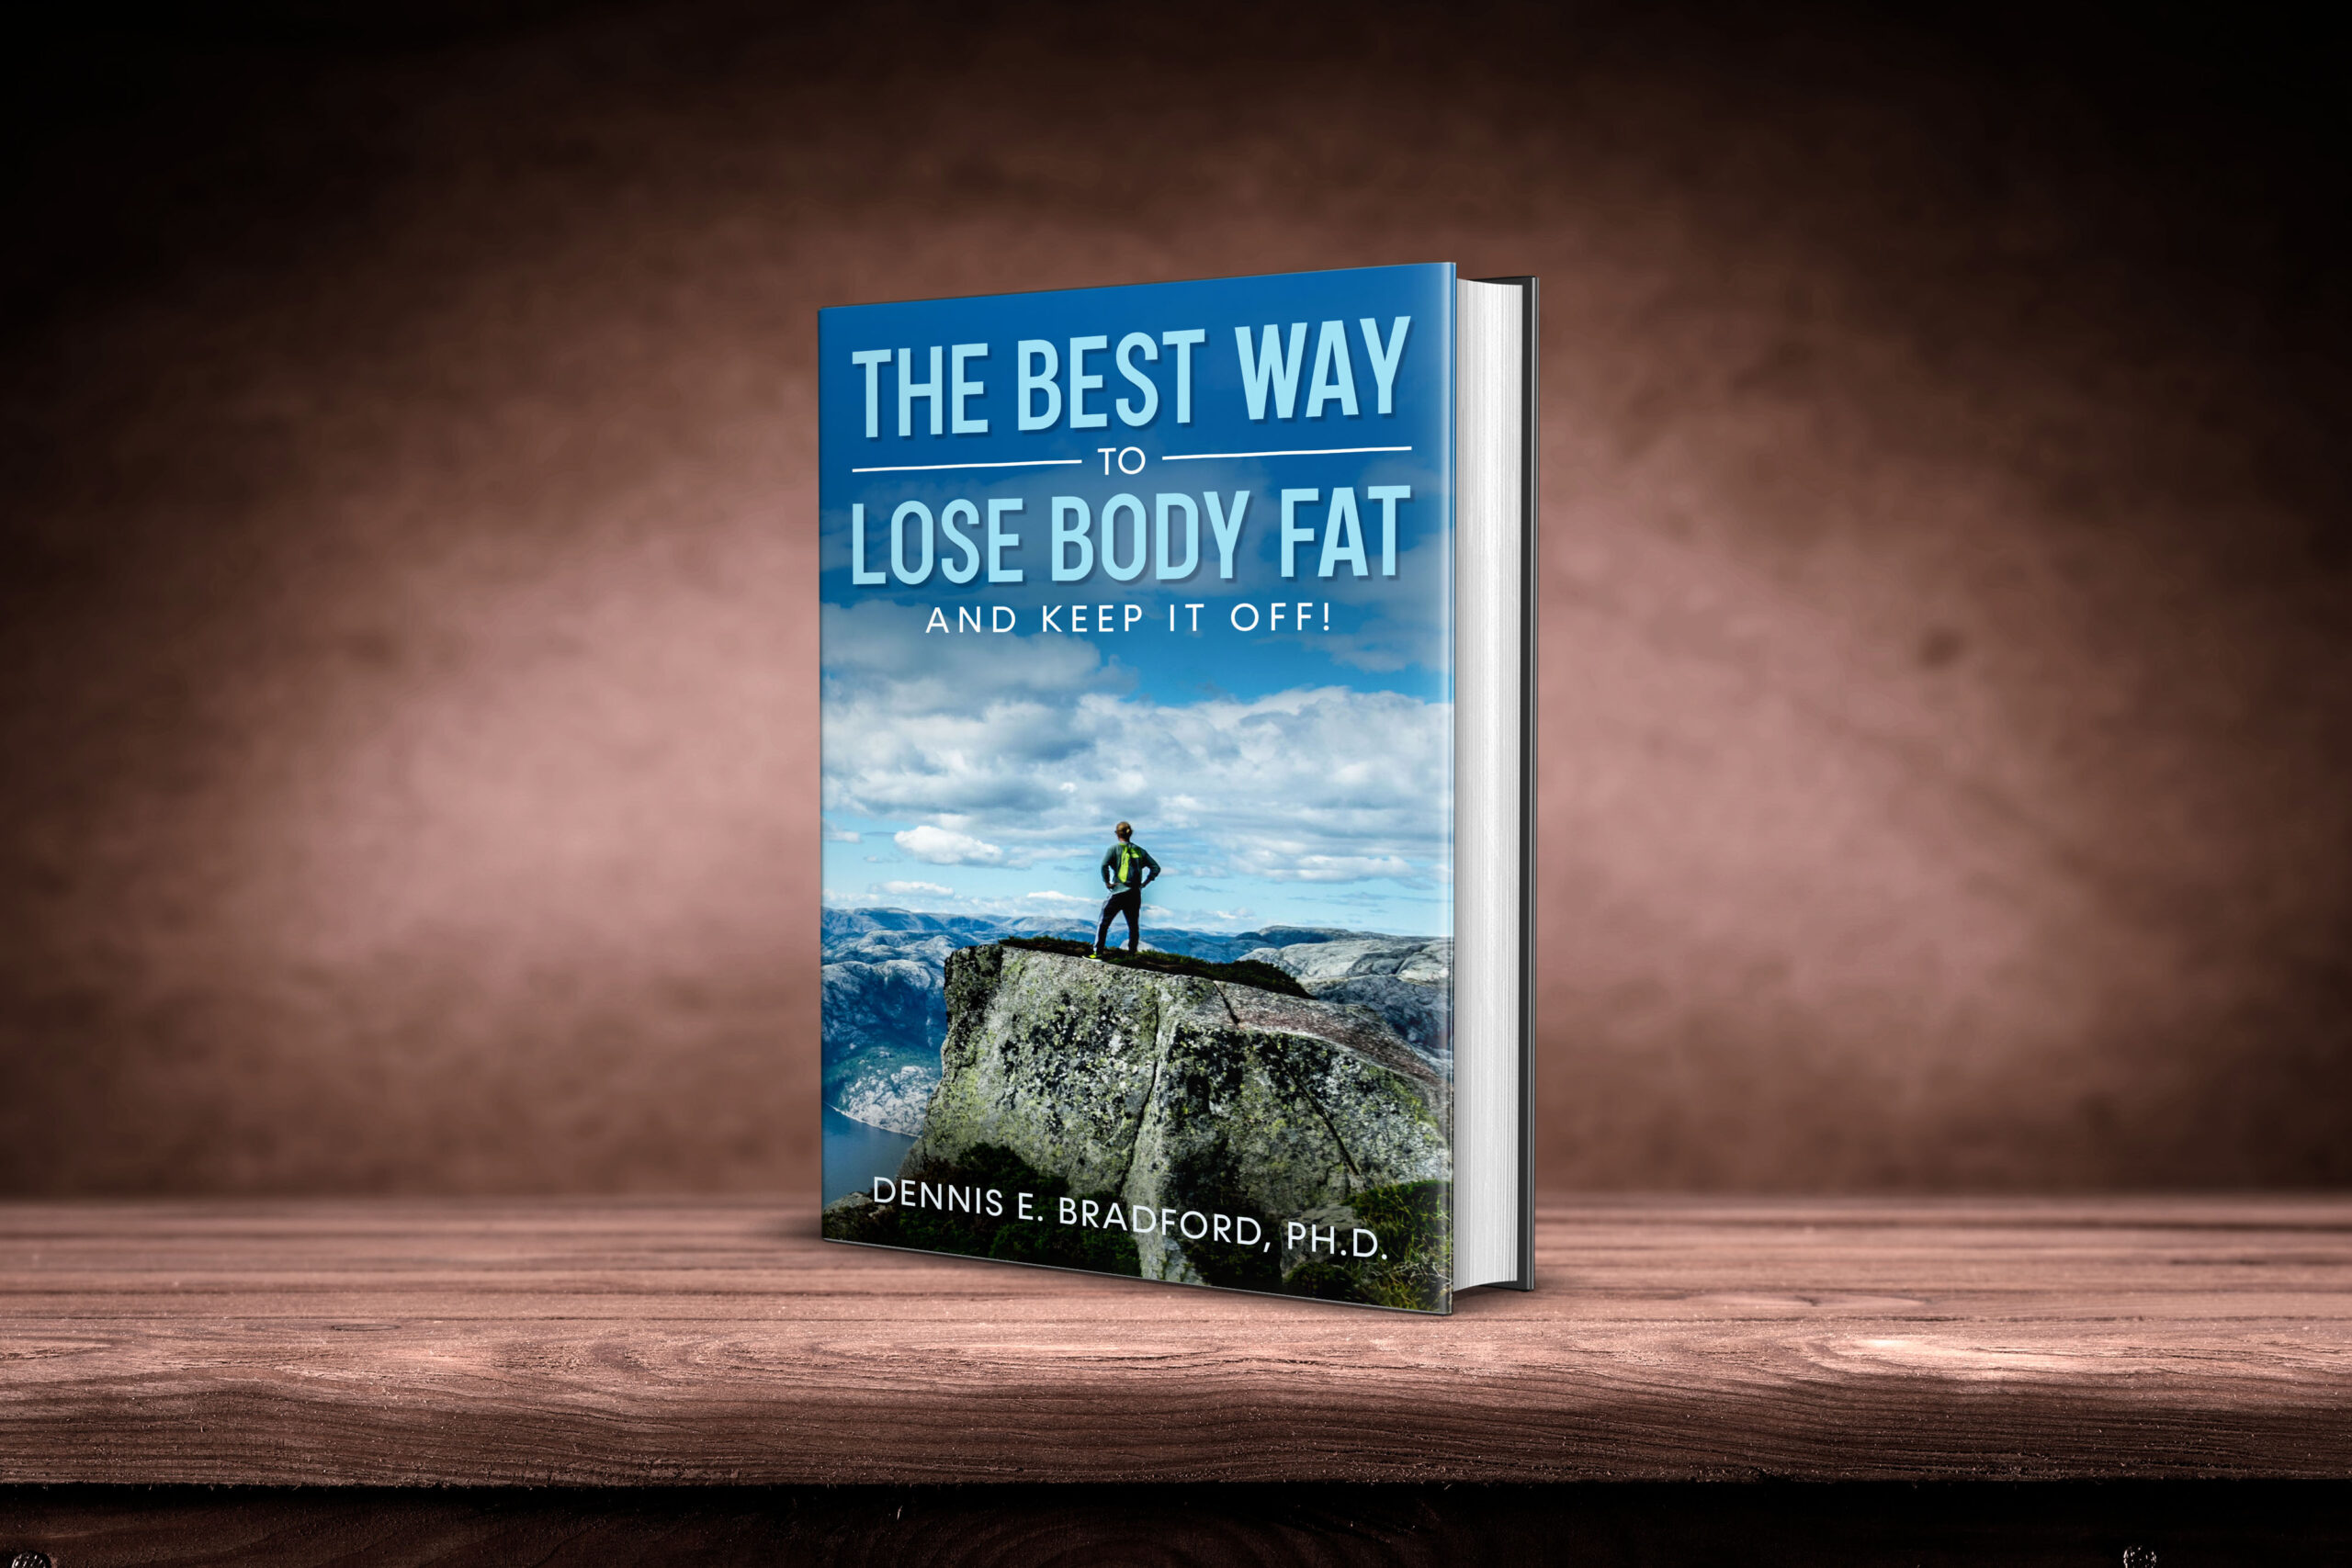 https://www.amazon.com/Best-Way-Lose-Body-Fat/dp/1940487331/